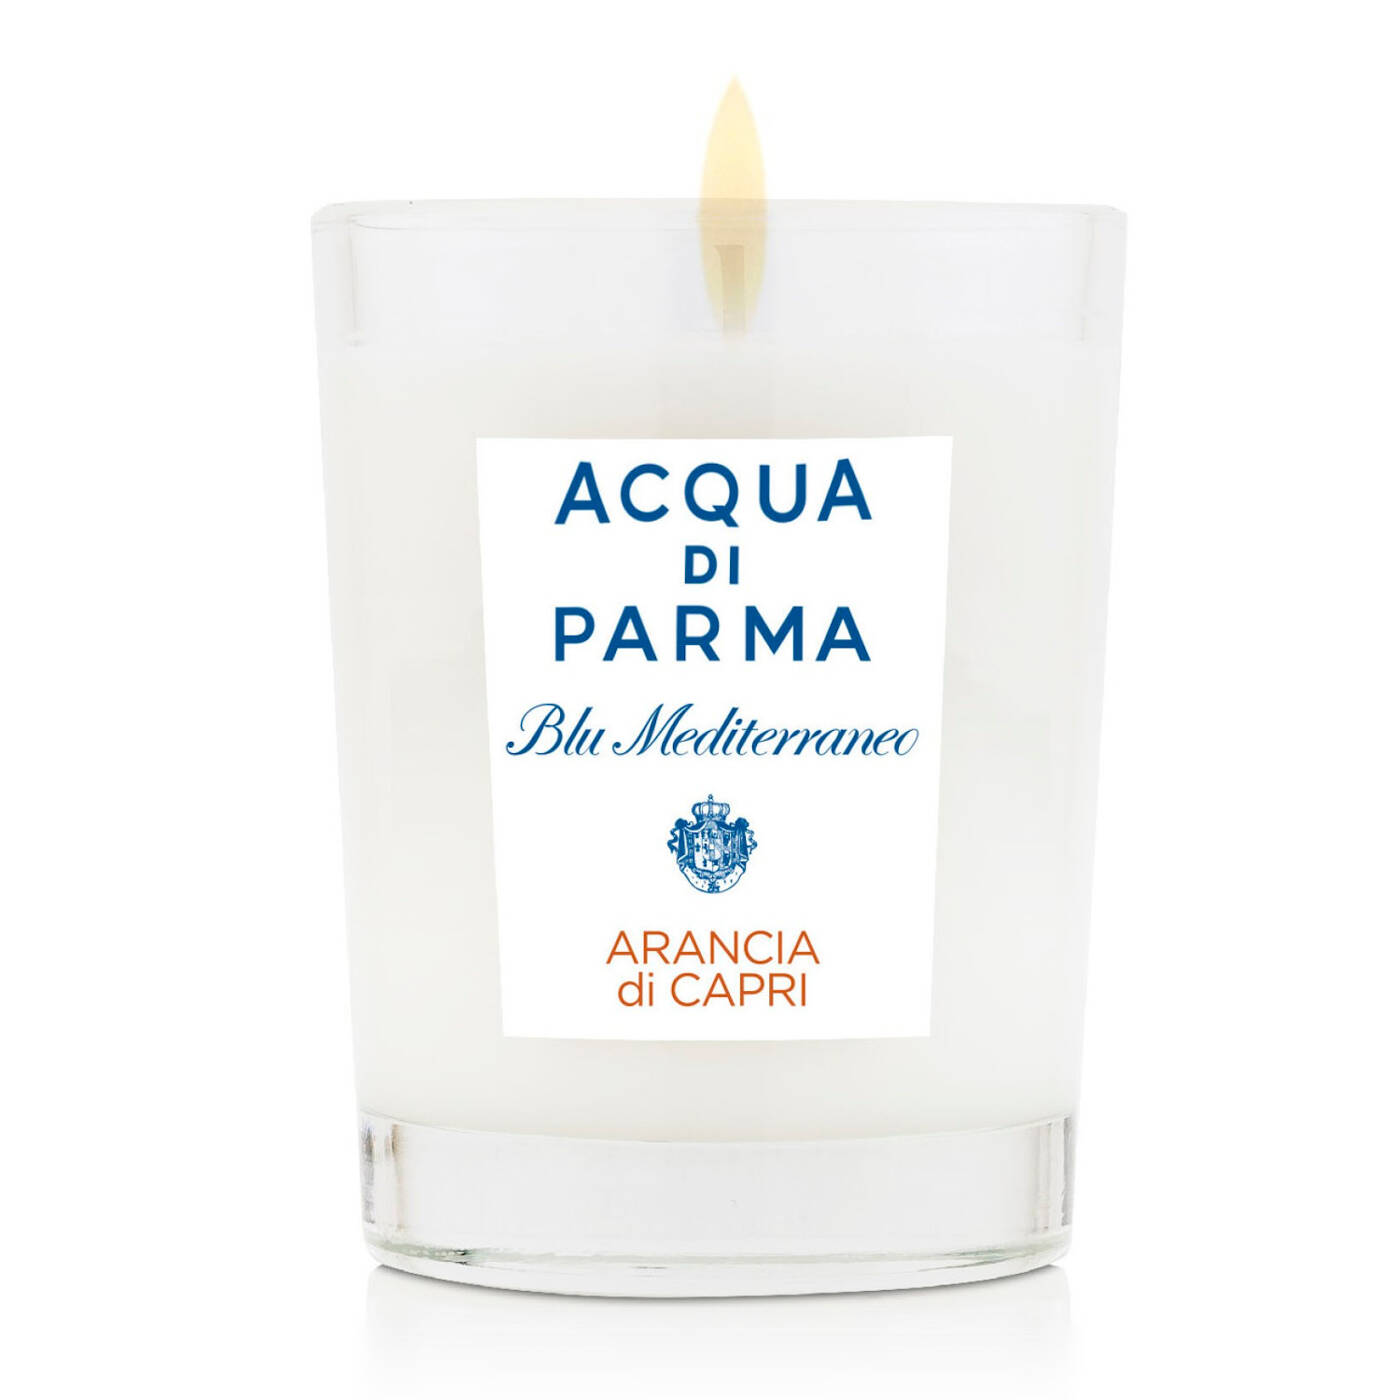 Arancia Capri Candle Acqua di Parma - online bestellen bei ludwigbeck.de